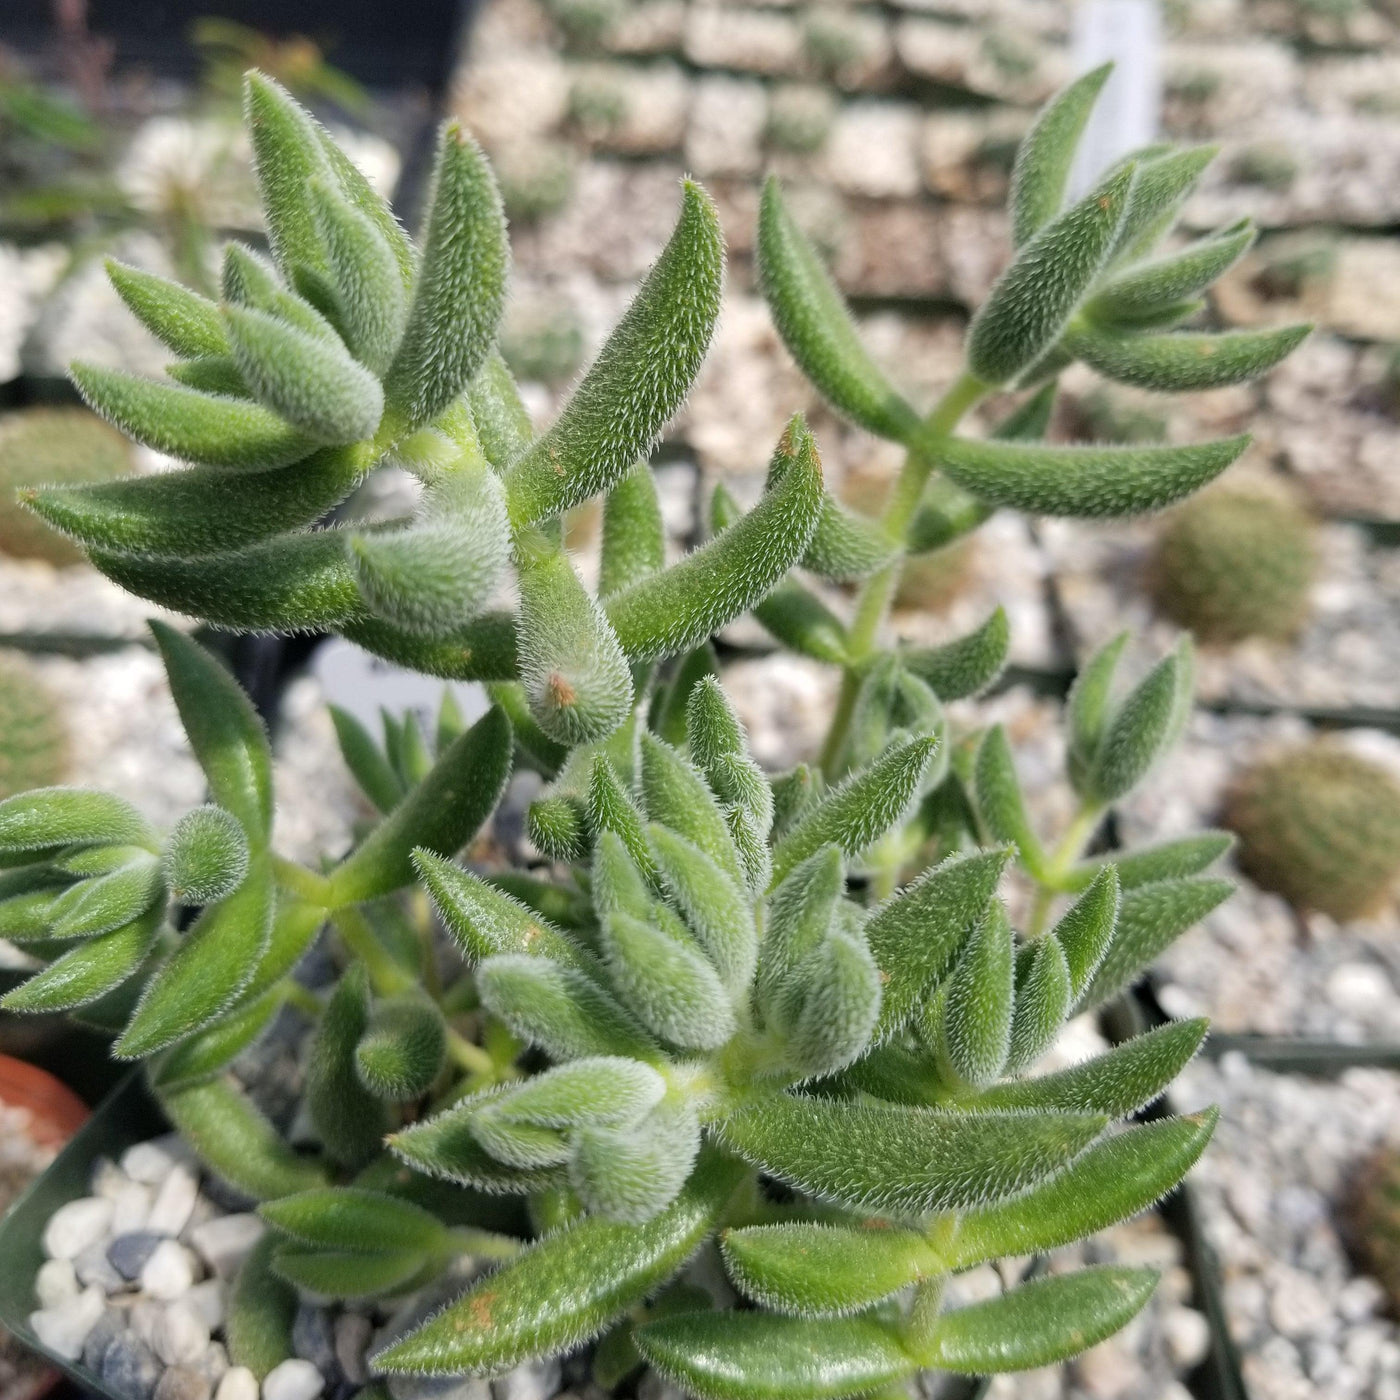 Crassula mesembryanthemoides hispida